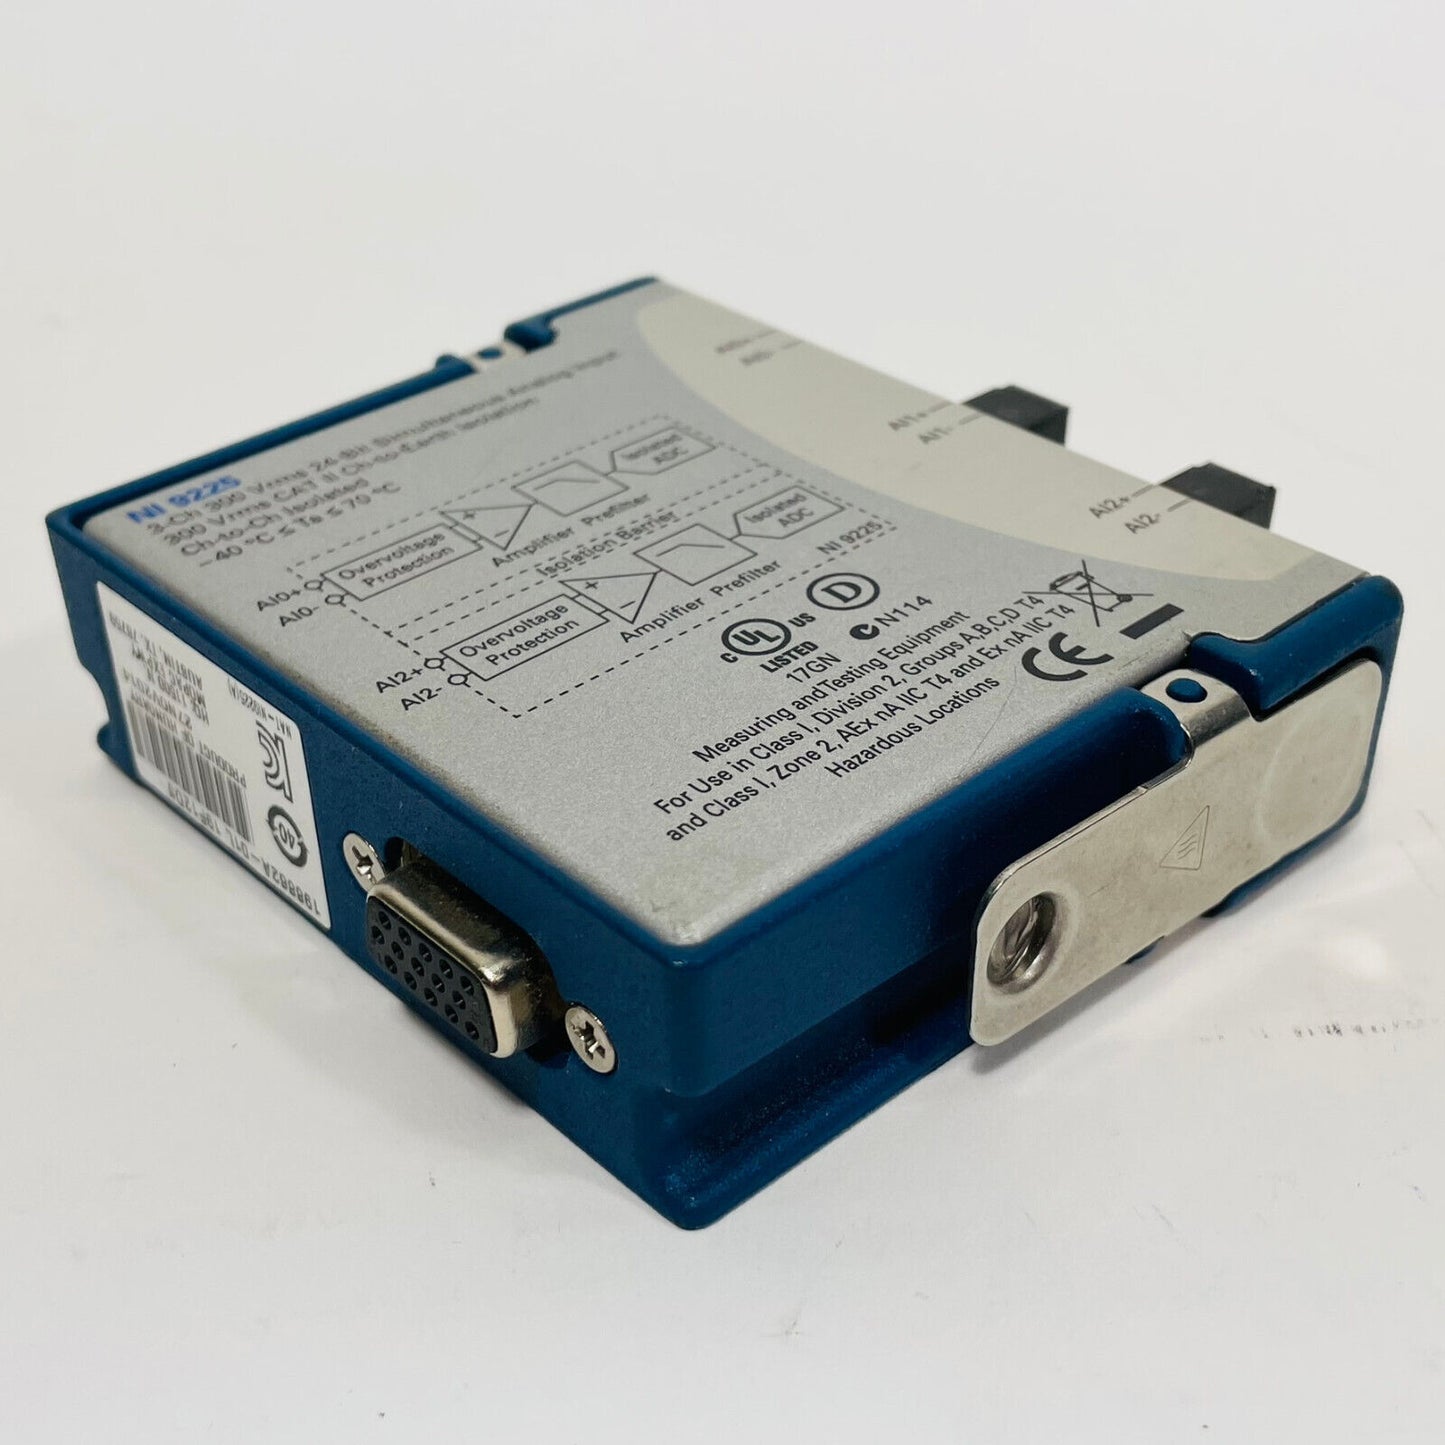 National Instruments NI-9225 cDAQ High Voltage Analog Input Module